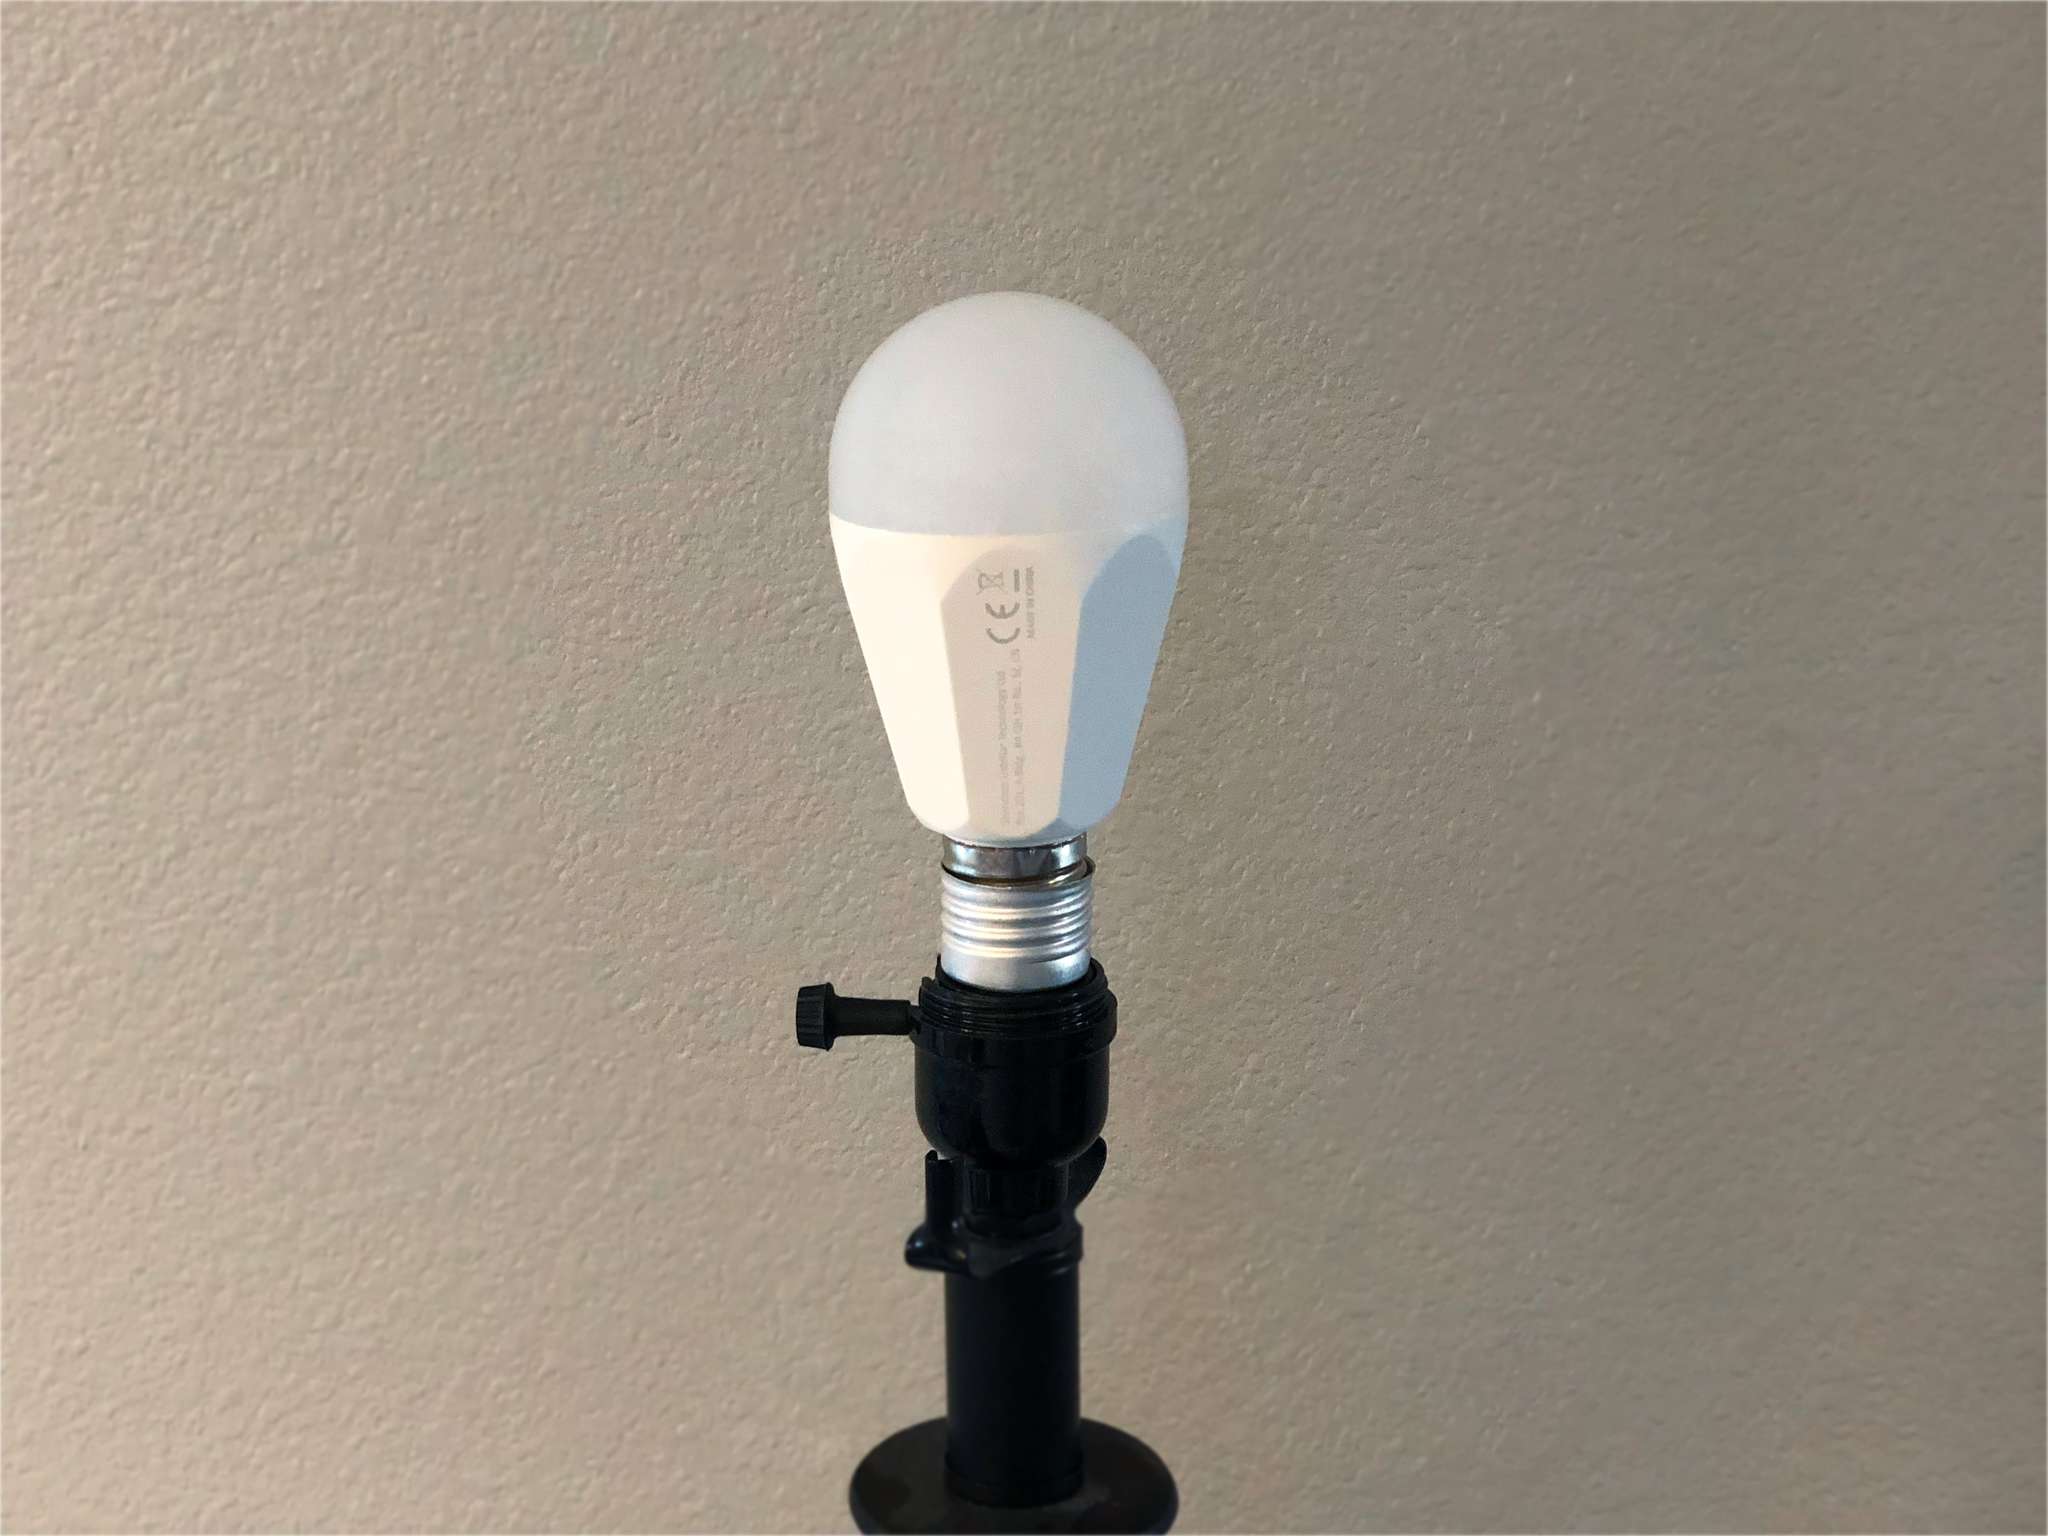 Novostella Smart Led Light Bulb Off